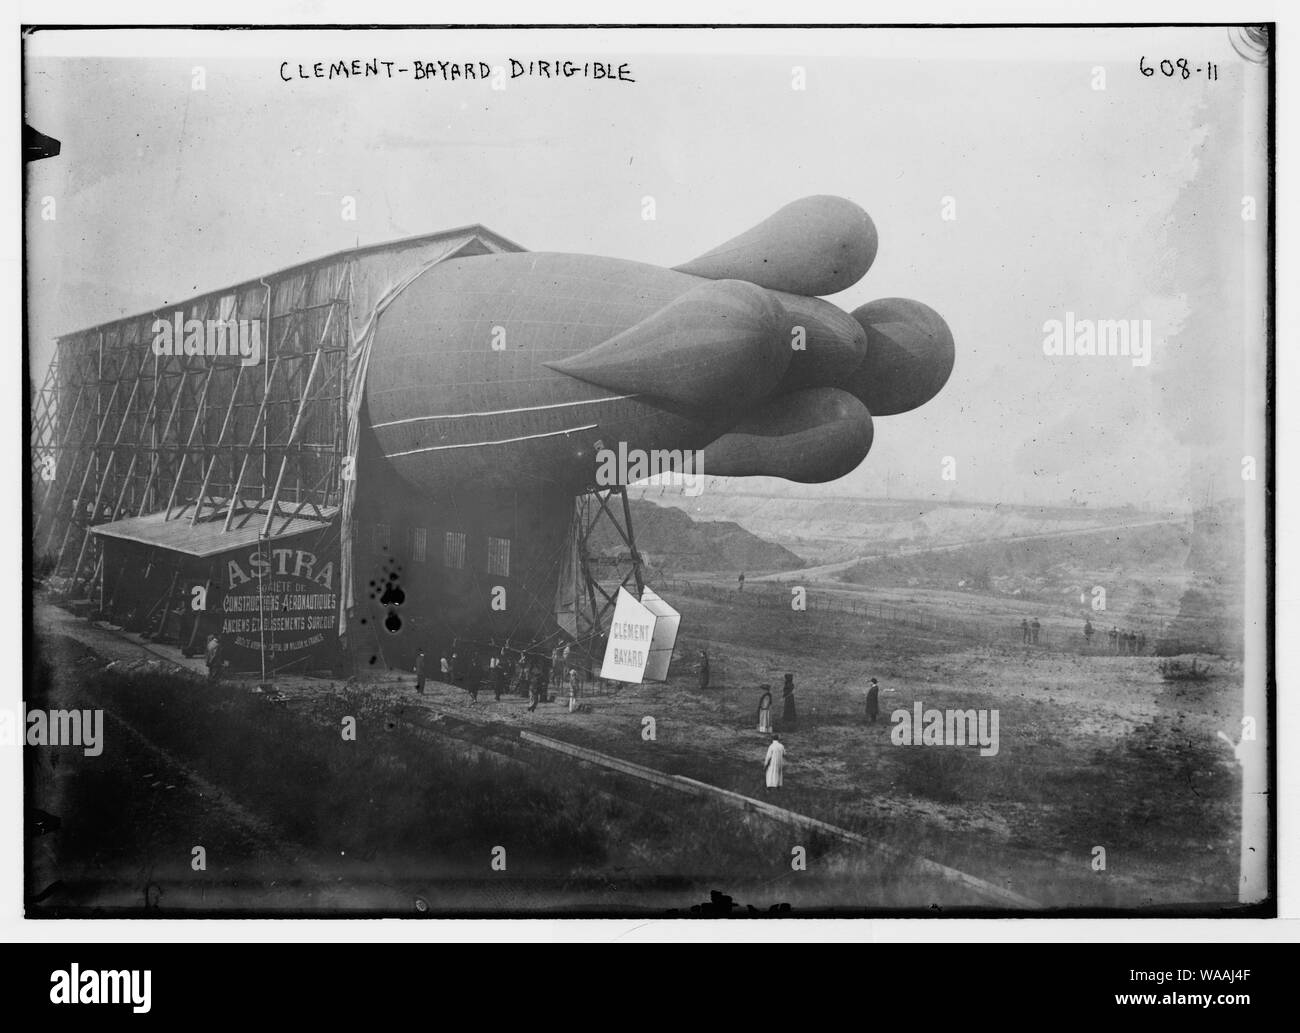 Clement-Bayard dirigibile [Francia] Foto Stock